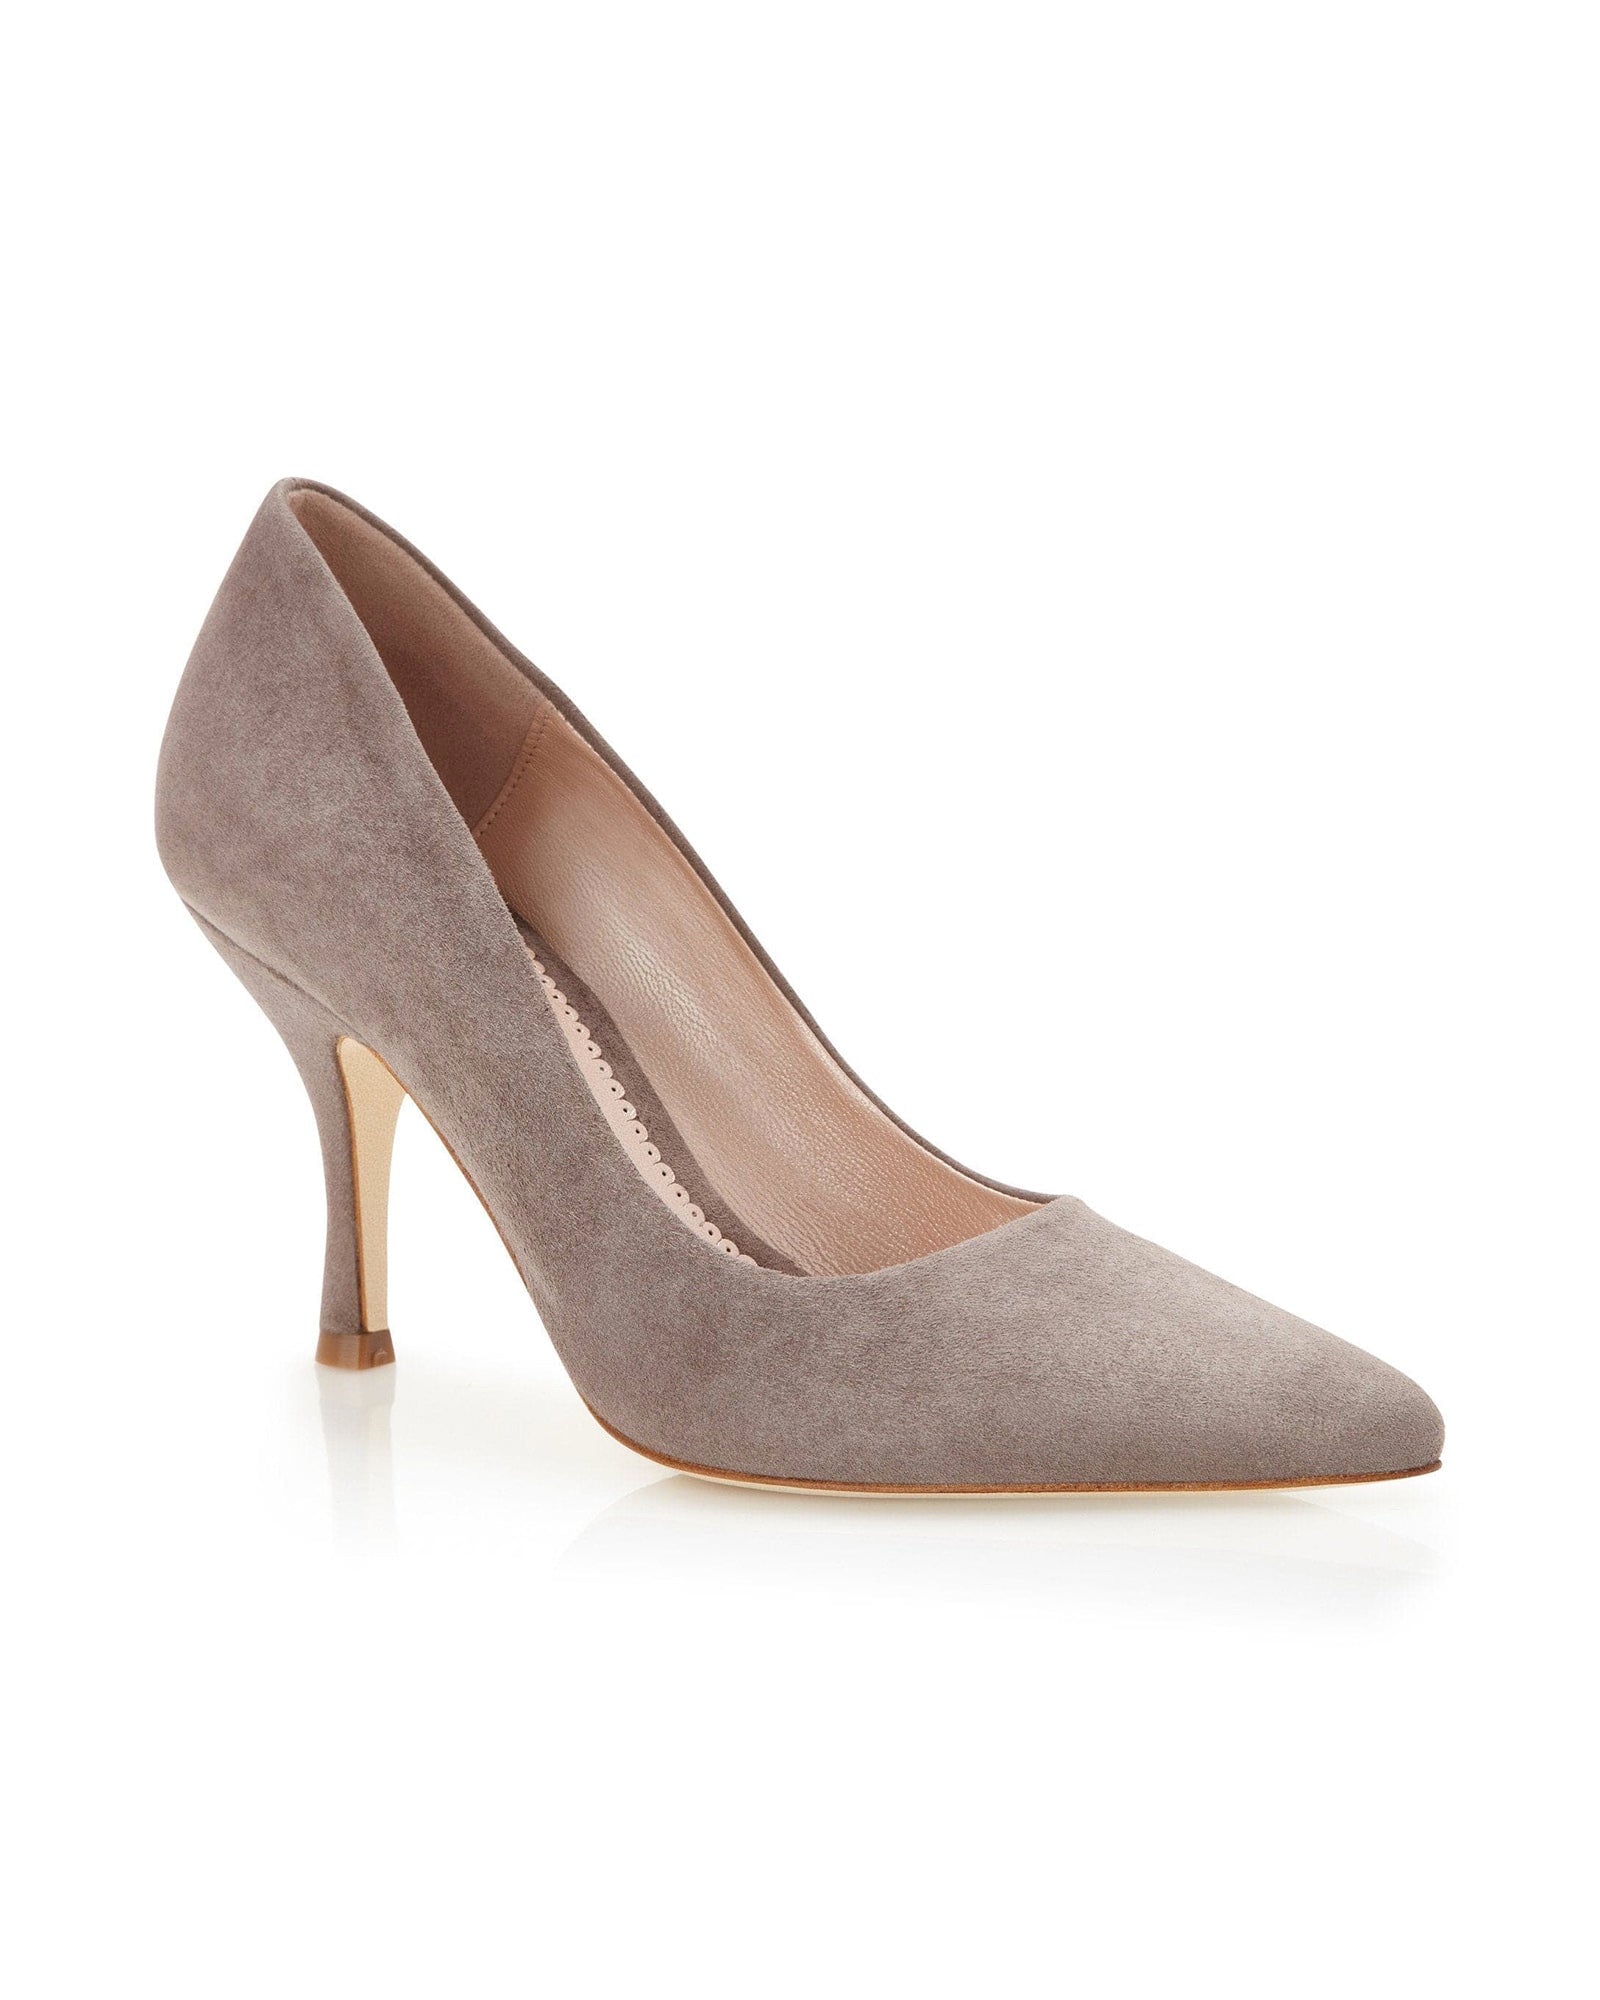 Olivia Cinder Fashion Shoe Grey Suede Court Shoes  image